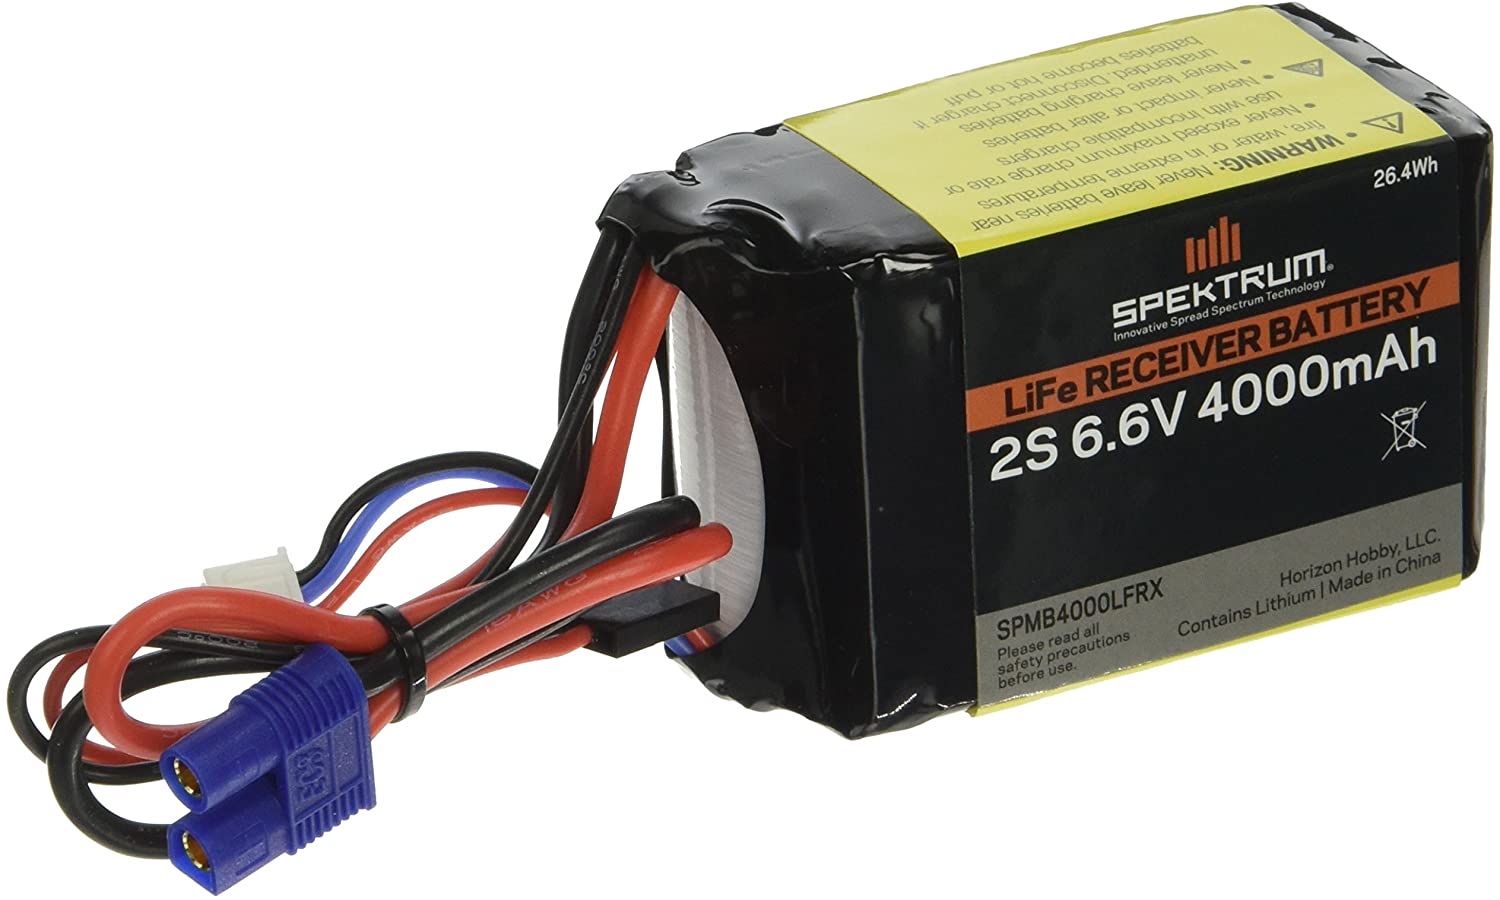 Spektrum 4000Mah 6.6V Li-Fe Receiver Battery